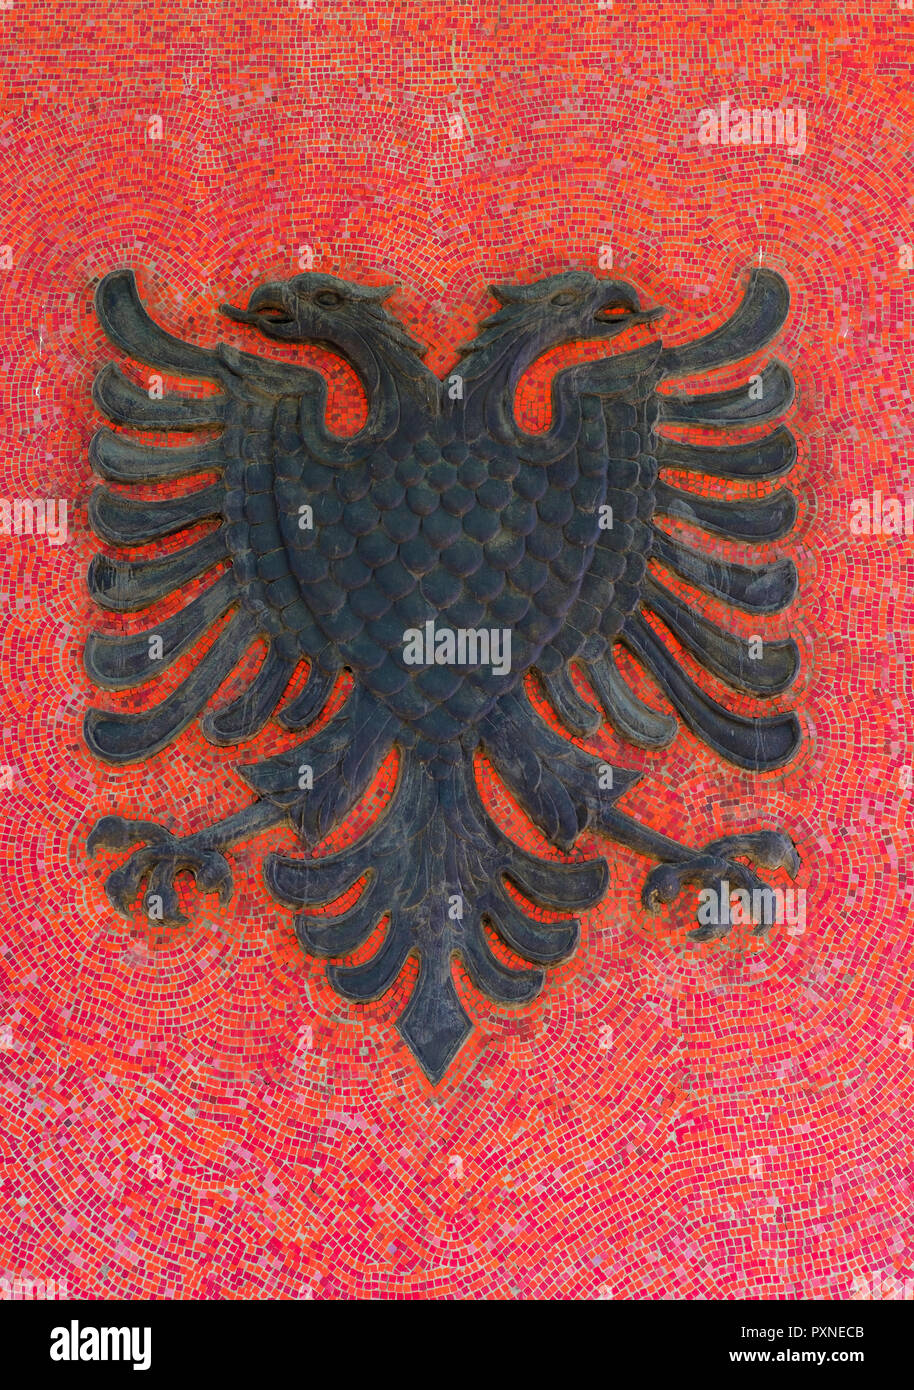 Albania, Lezhe, animale araldico, double eagle Foto Stock